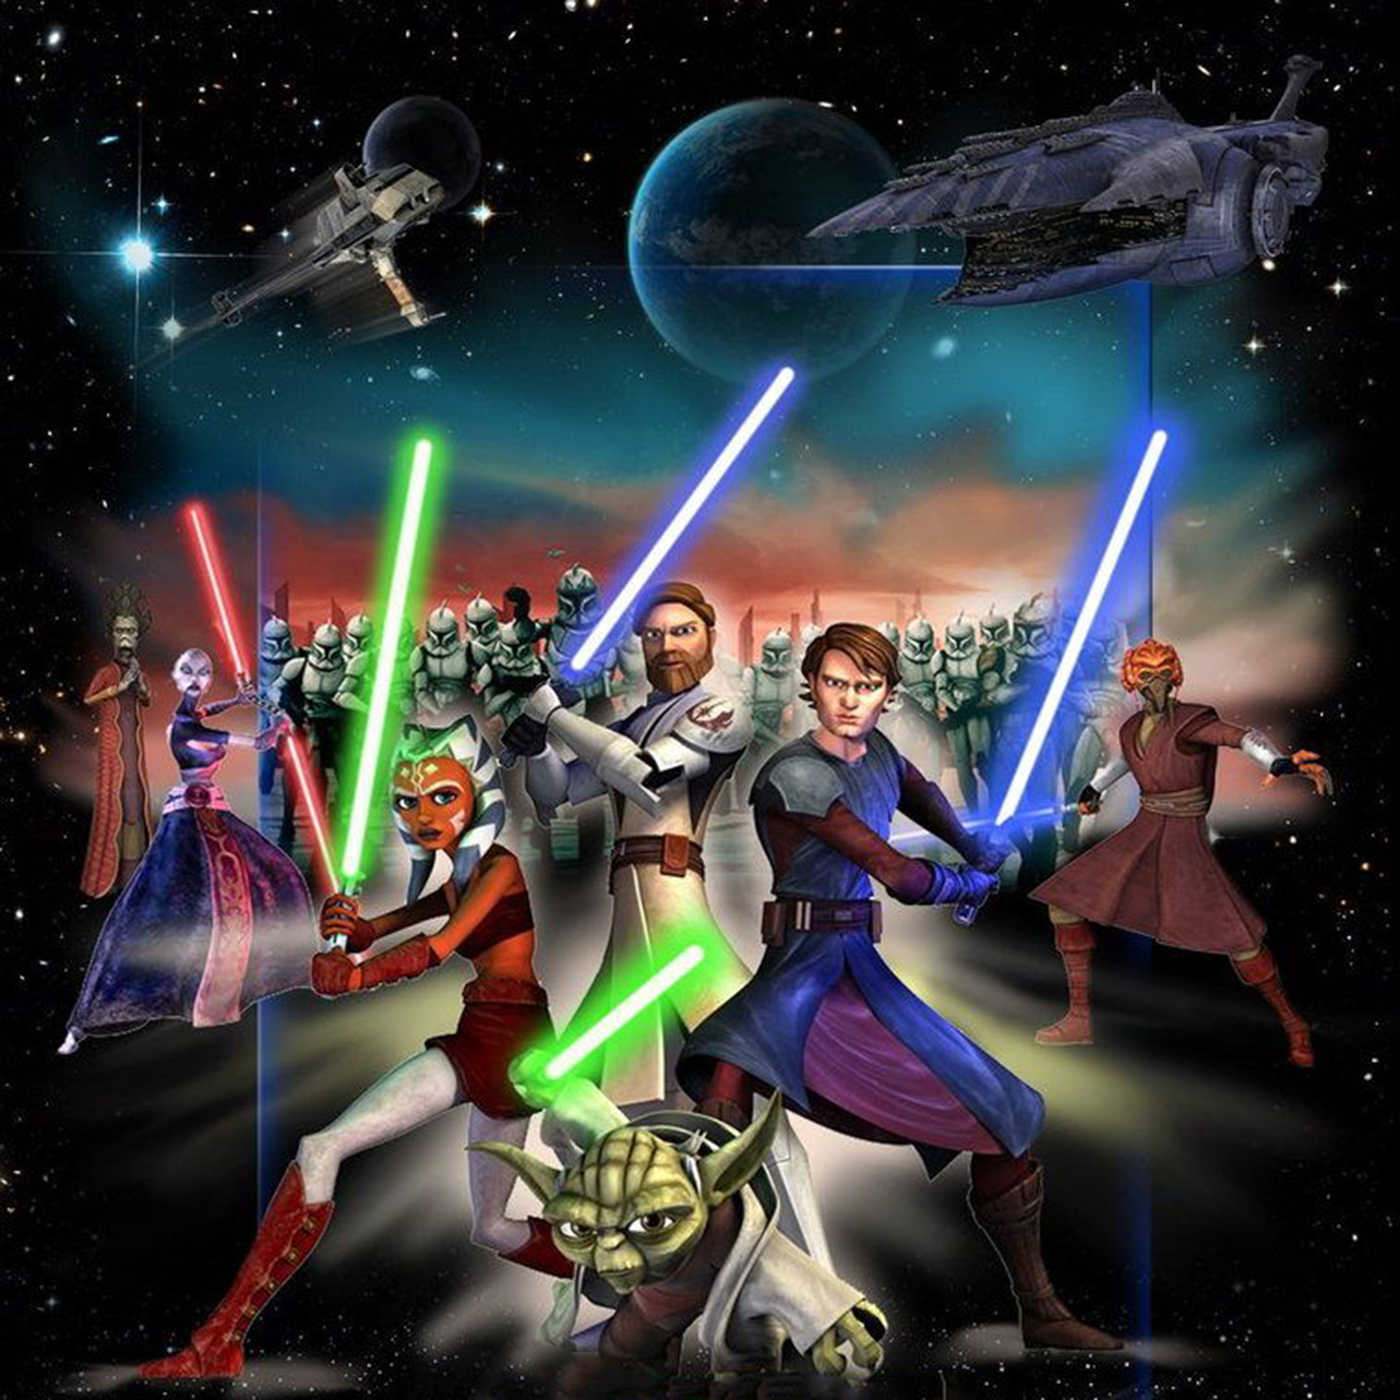 Star Wars: The Clone Wars Season 1